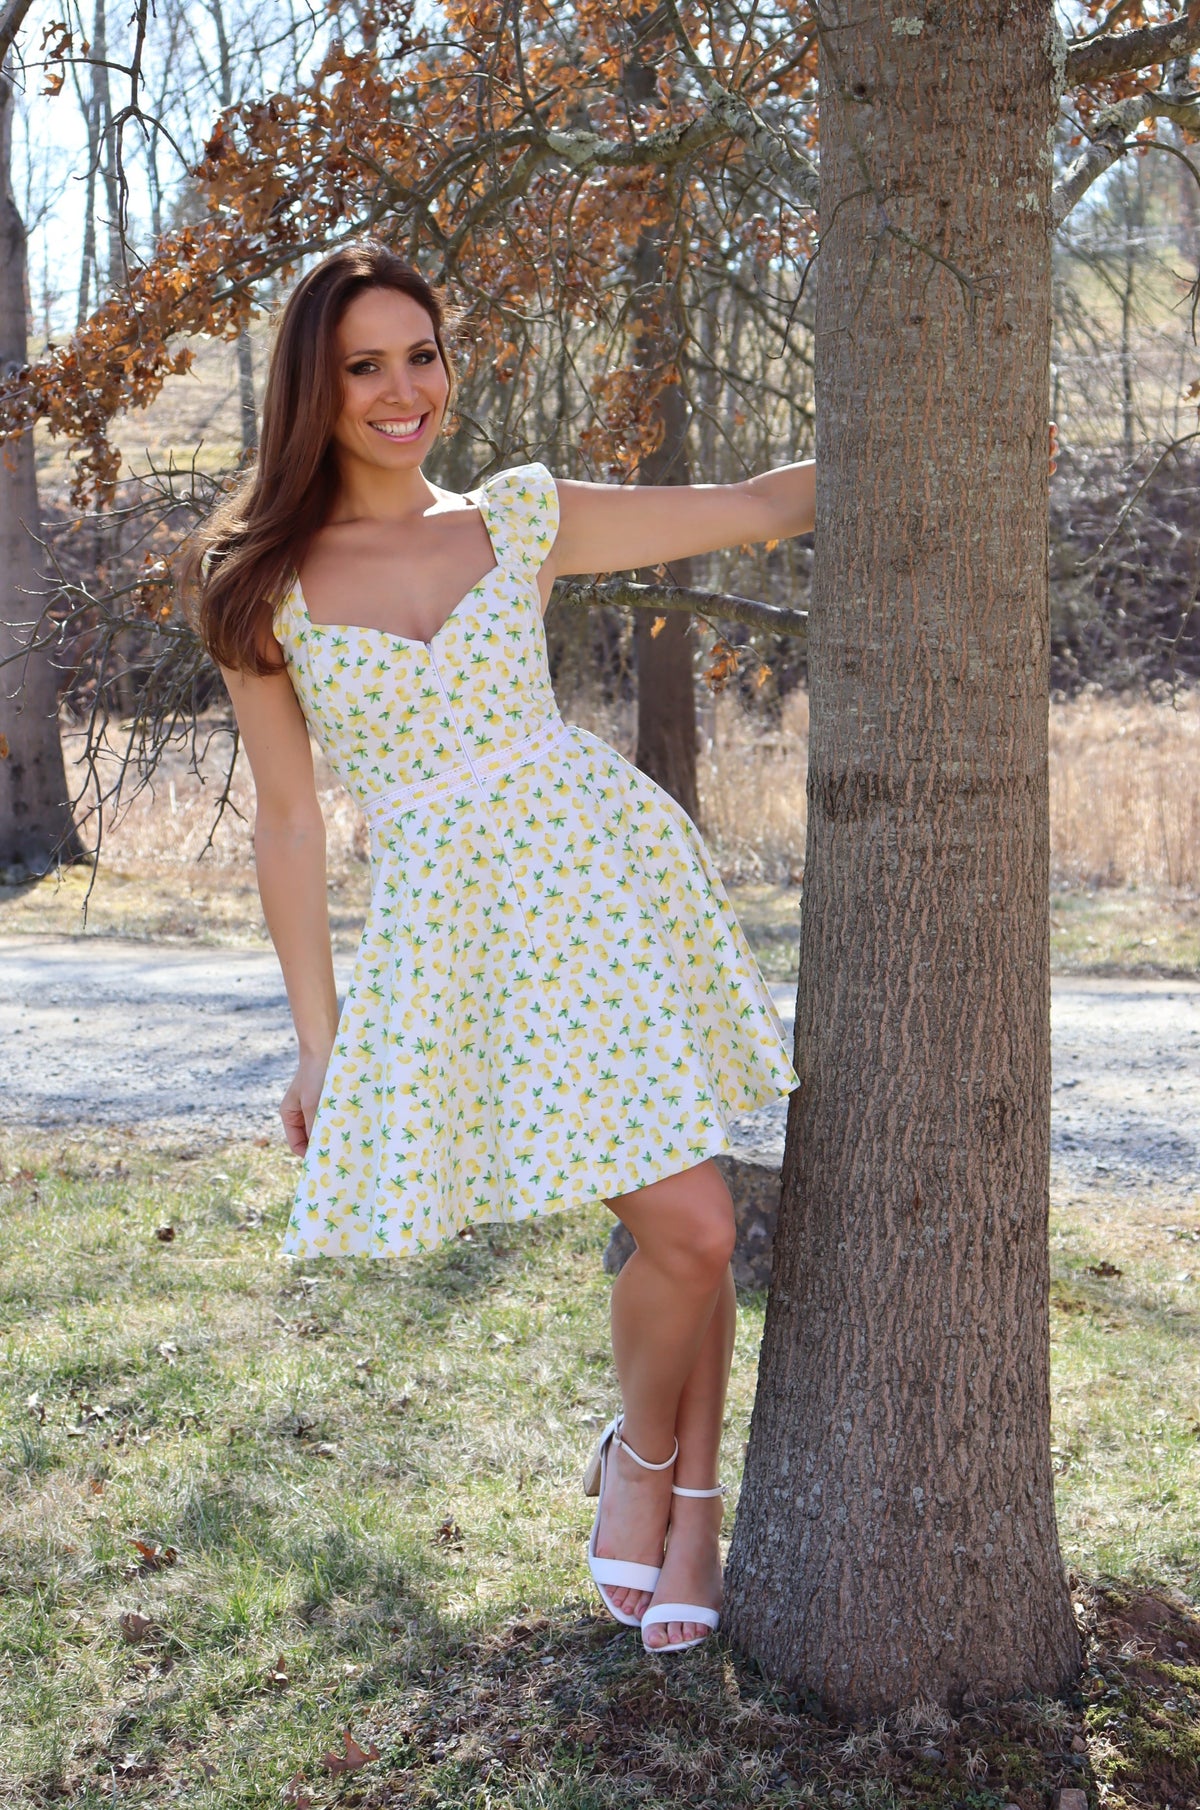 Model in lemon print dress posing next to a tree, smiling.